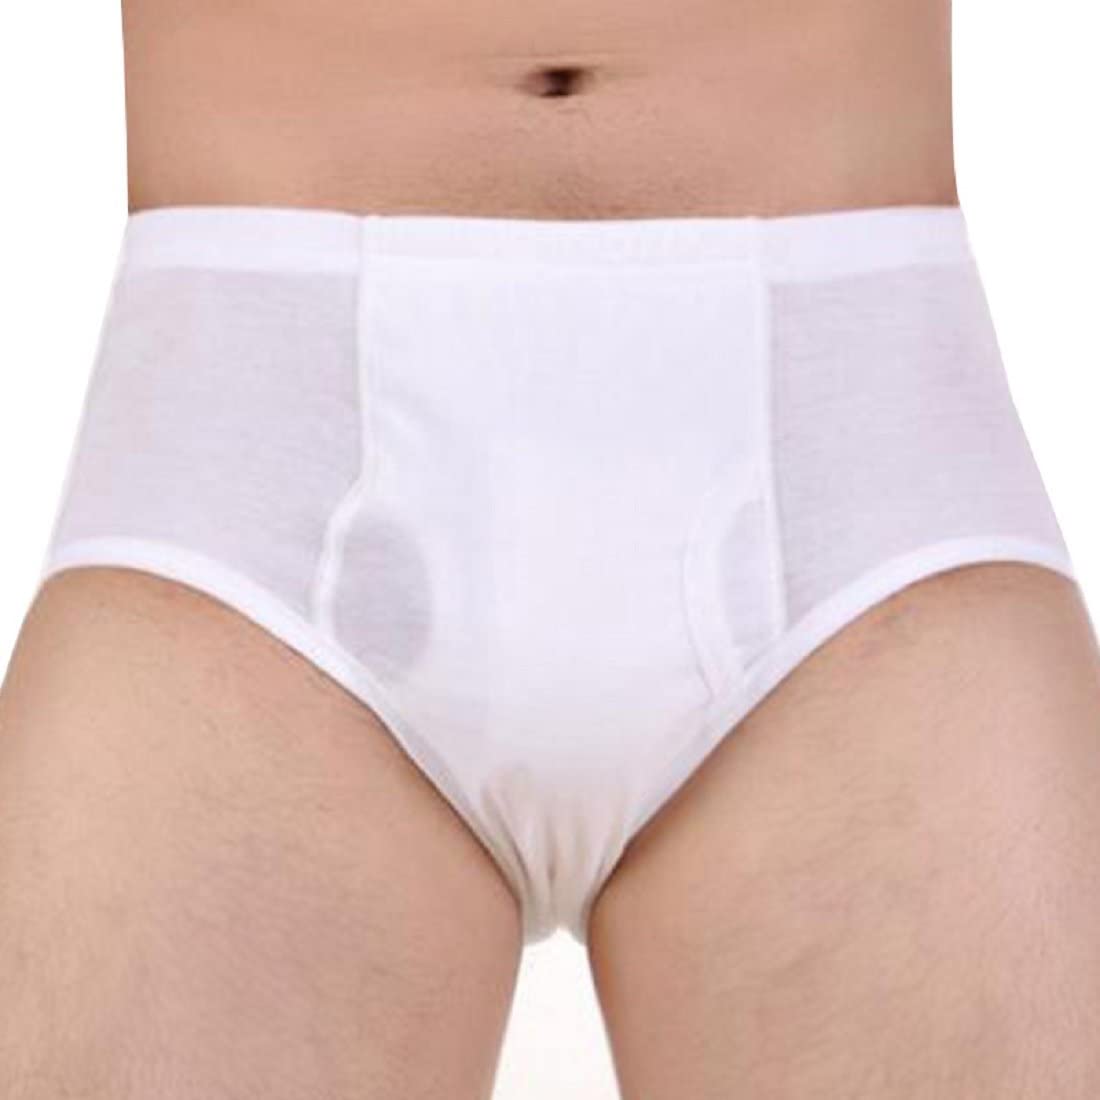 https://sovina.vn/wp-content/uploads/2020/12/Mens-Incontinence-Briefs-3Packs-Men%E2%80%99s-Incontinence-Underwear-Cotton-Washable-Reusable-Incontinence-Underwear-for-Men-Built-in-Cotton-Pad-1.jpg